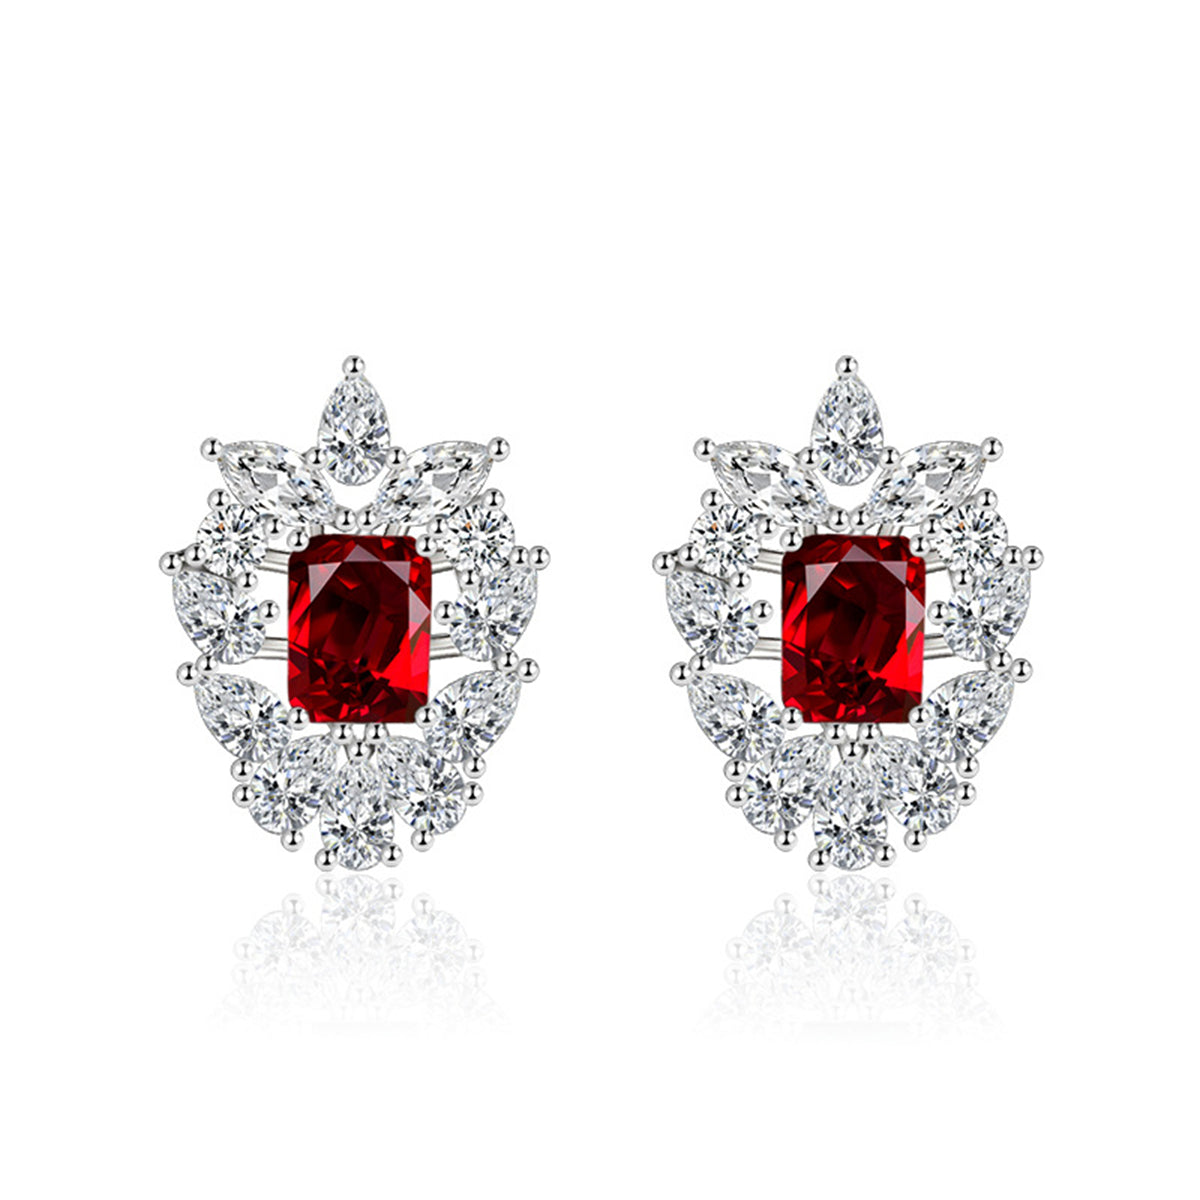 Red Crystal & Cubic Zirconia Cluster Stud Earrings